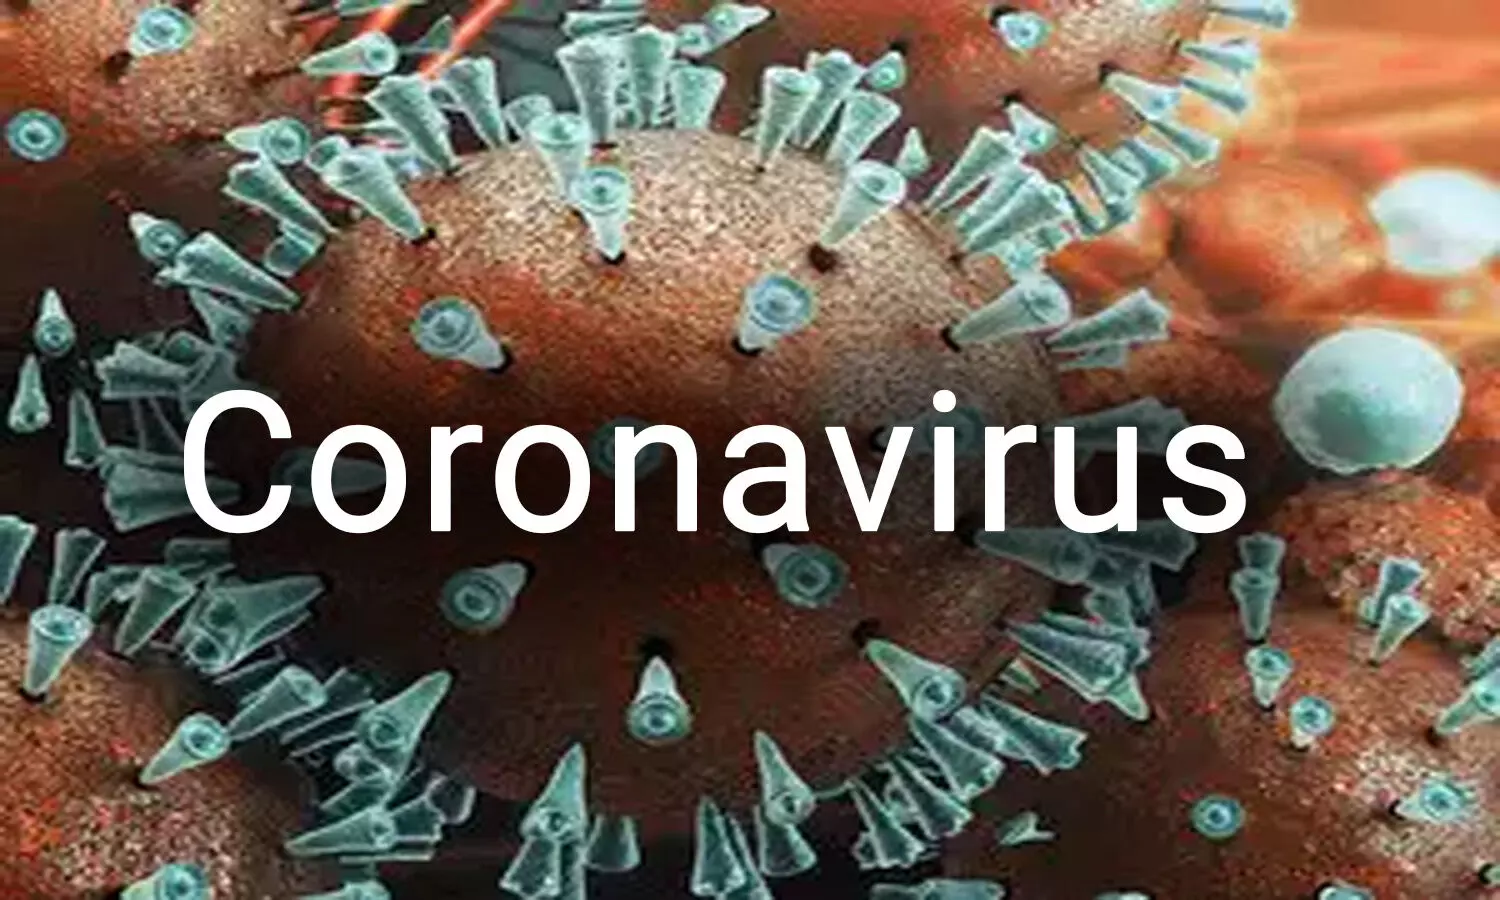 China reports 22 new coronavirus deaths taking toll to 3,158